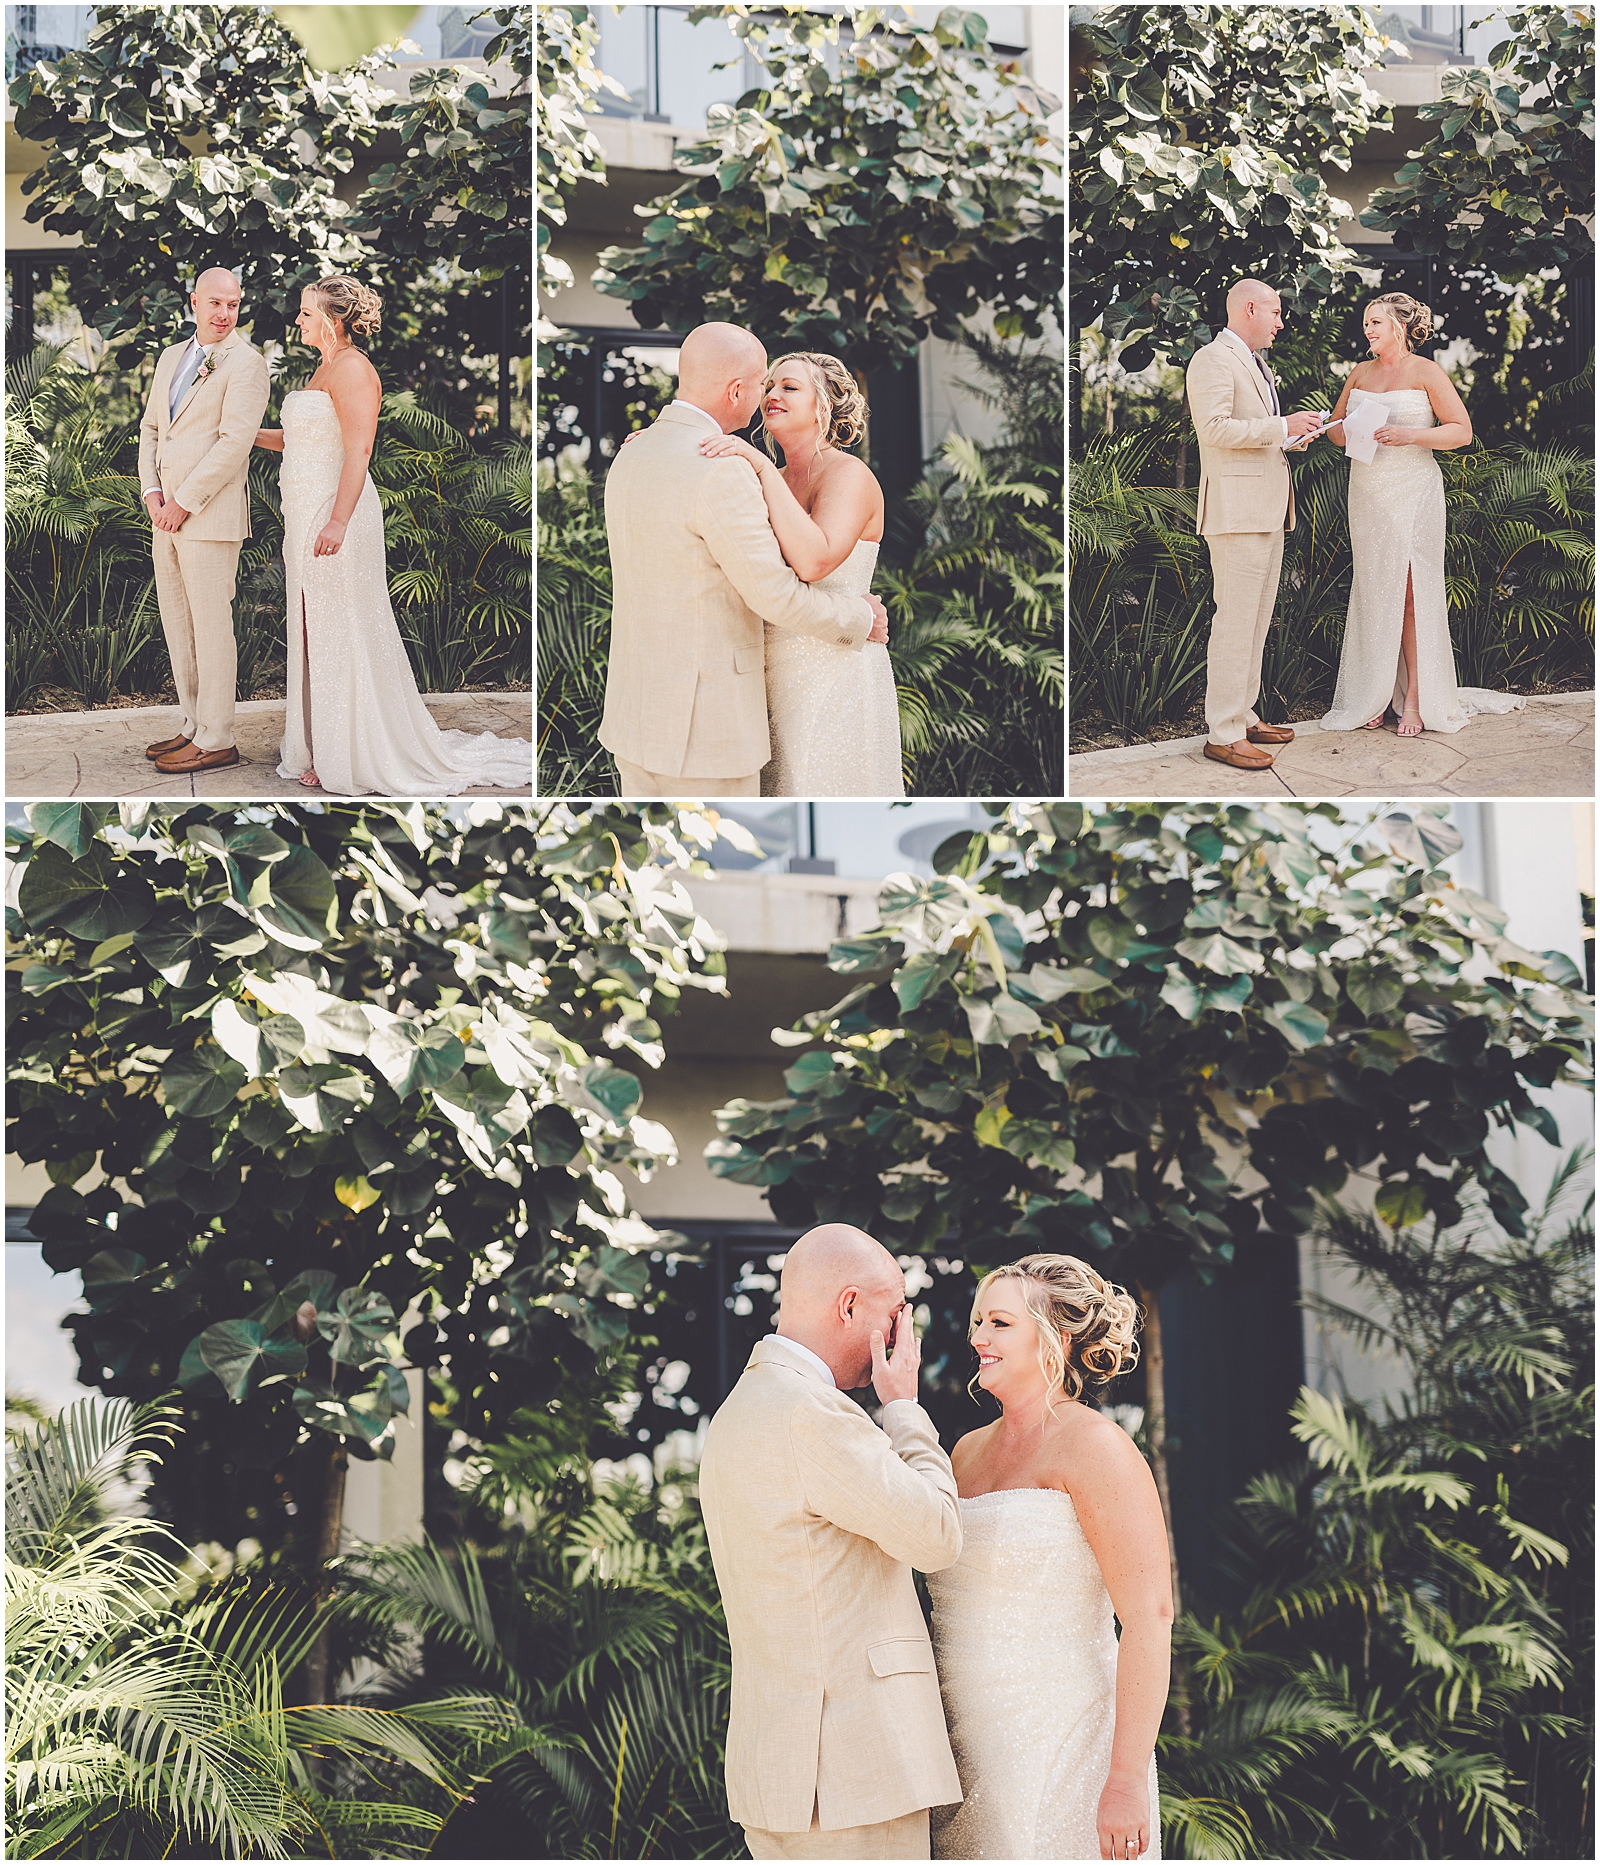 Amie and Ben's destination wedding at the Hilton Tulum Riviera Maya in Mexico with Chicagoland wedding photographer Kara Evans Photographer.